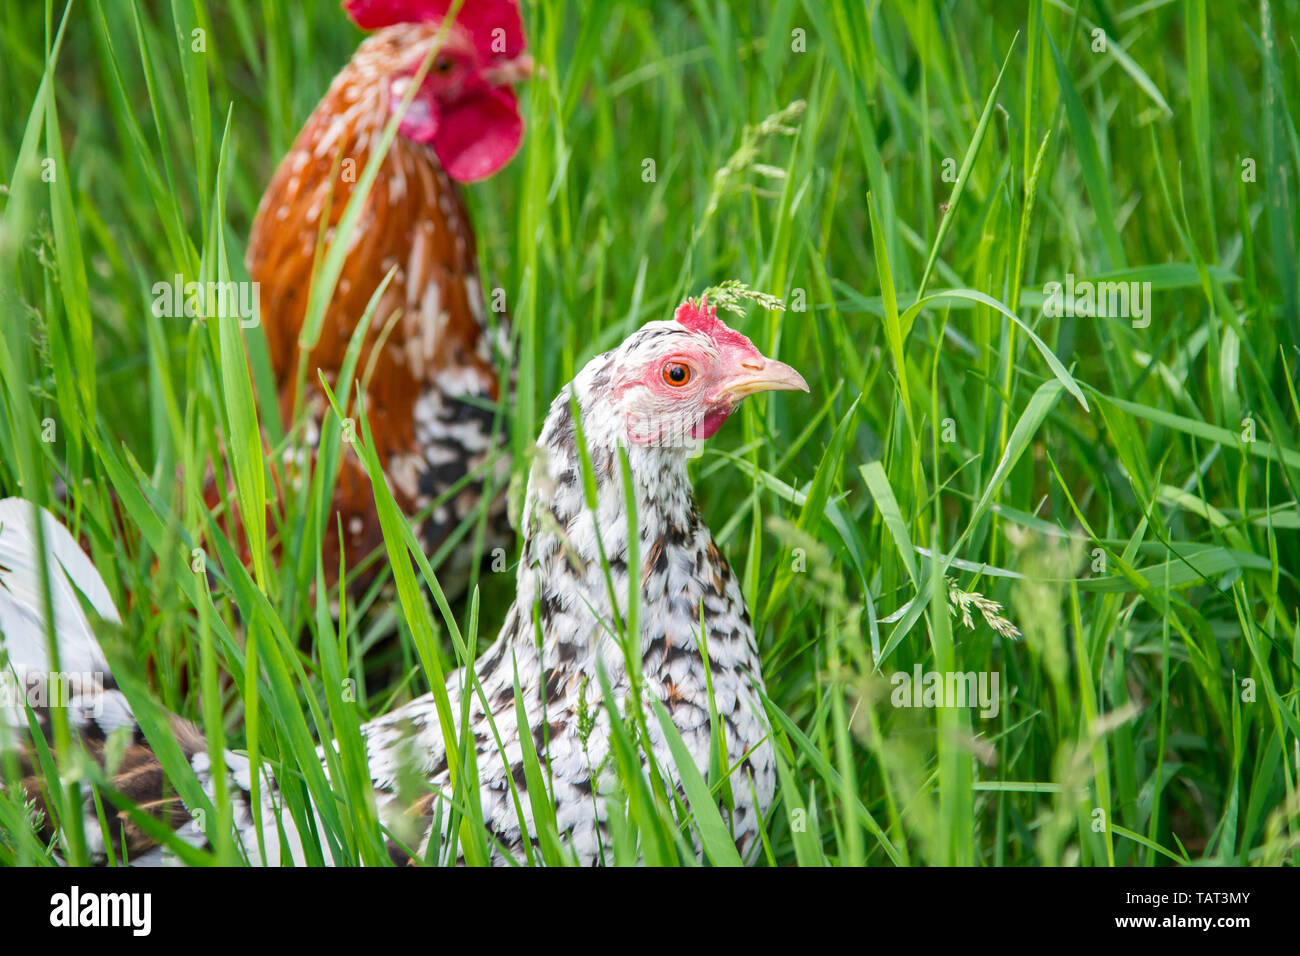 Steinpiperl Steinhendl Stoapiperl - - - Grupo de pollo - Críticamente en peligro Pollo raza de Austria en free range (Gallus gallus domesticus) Foto de stock